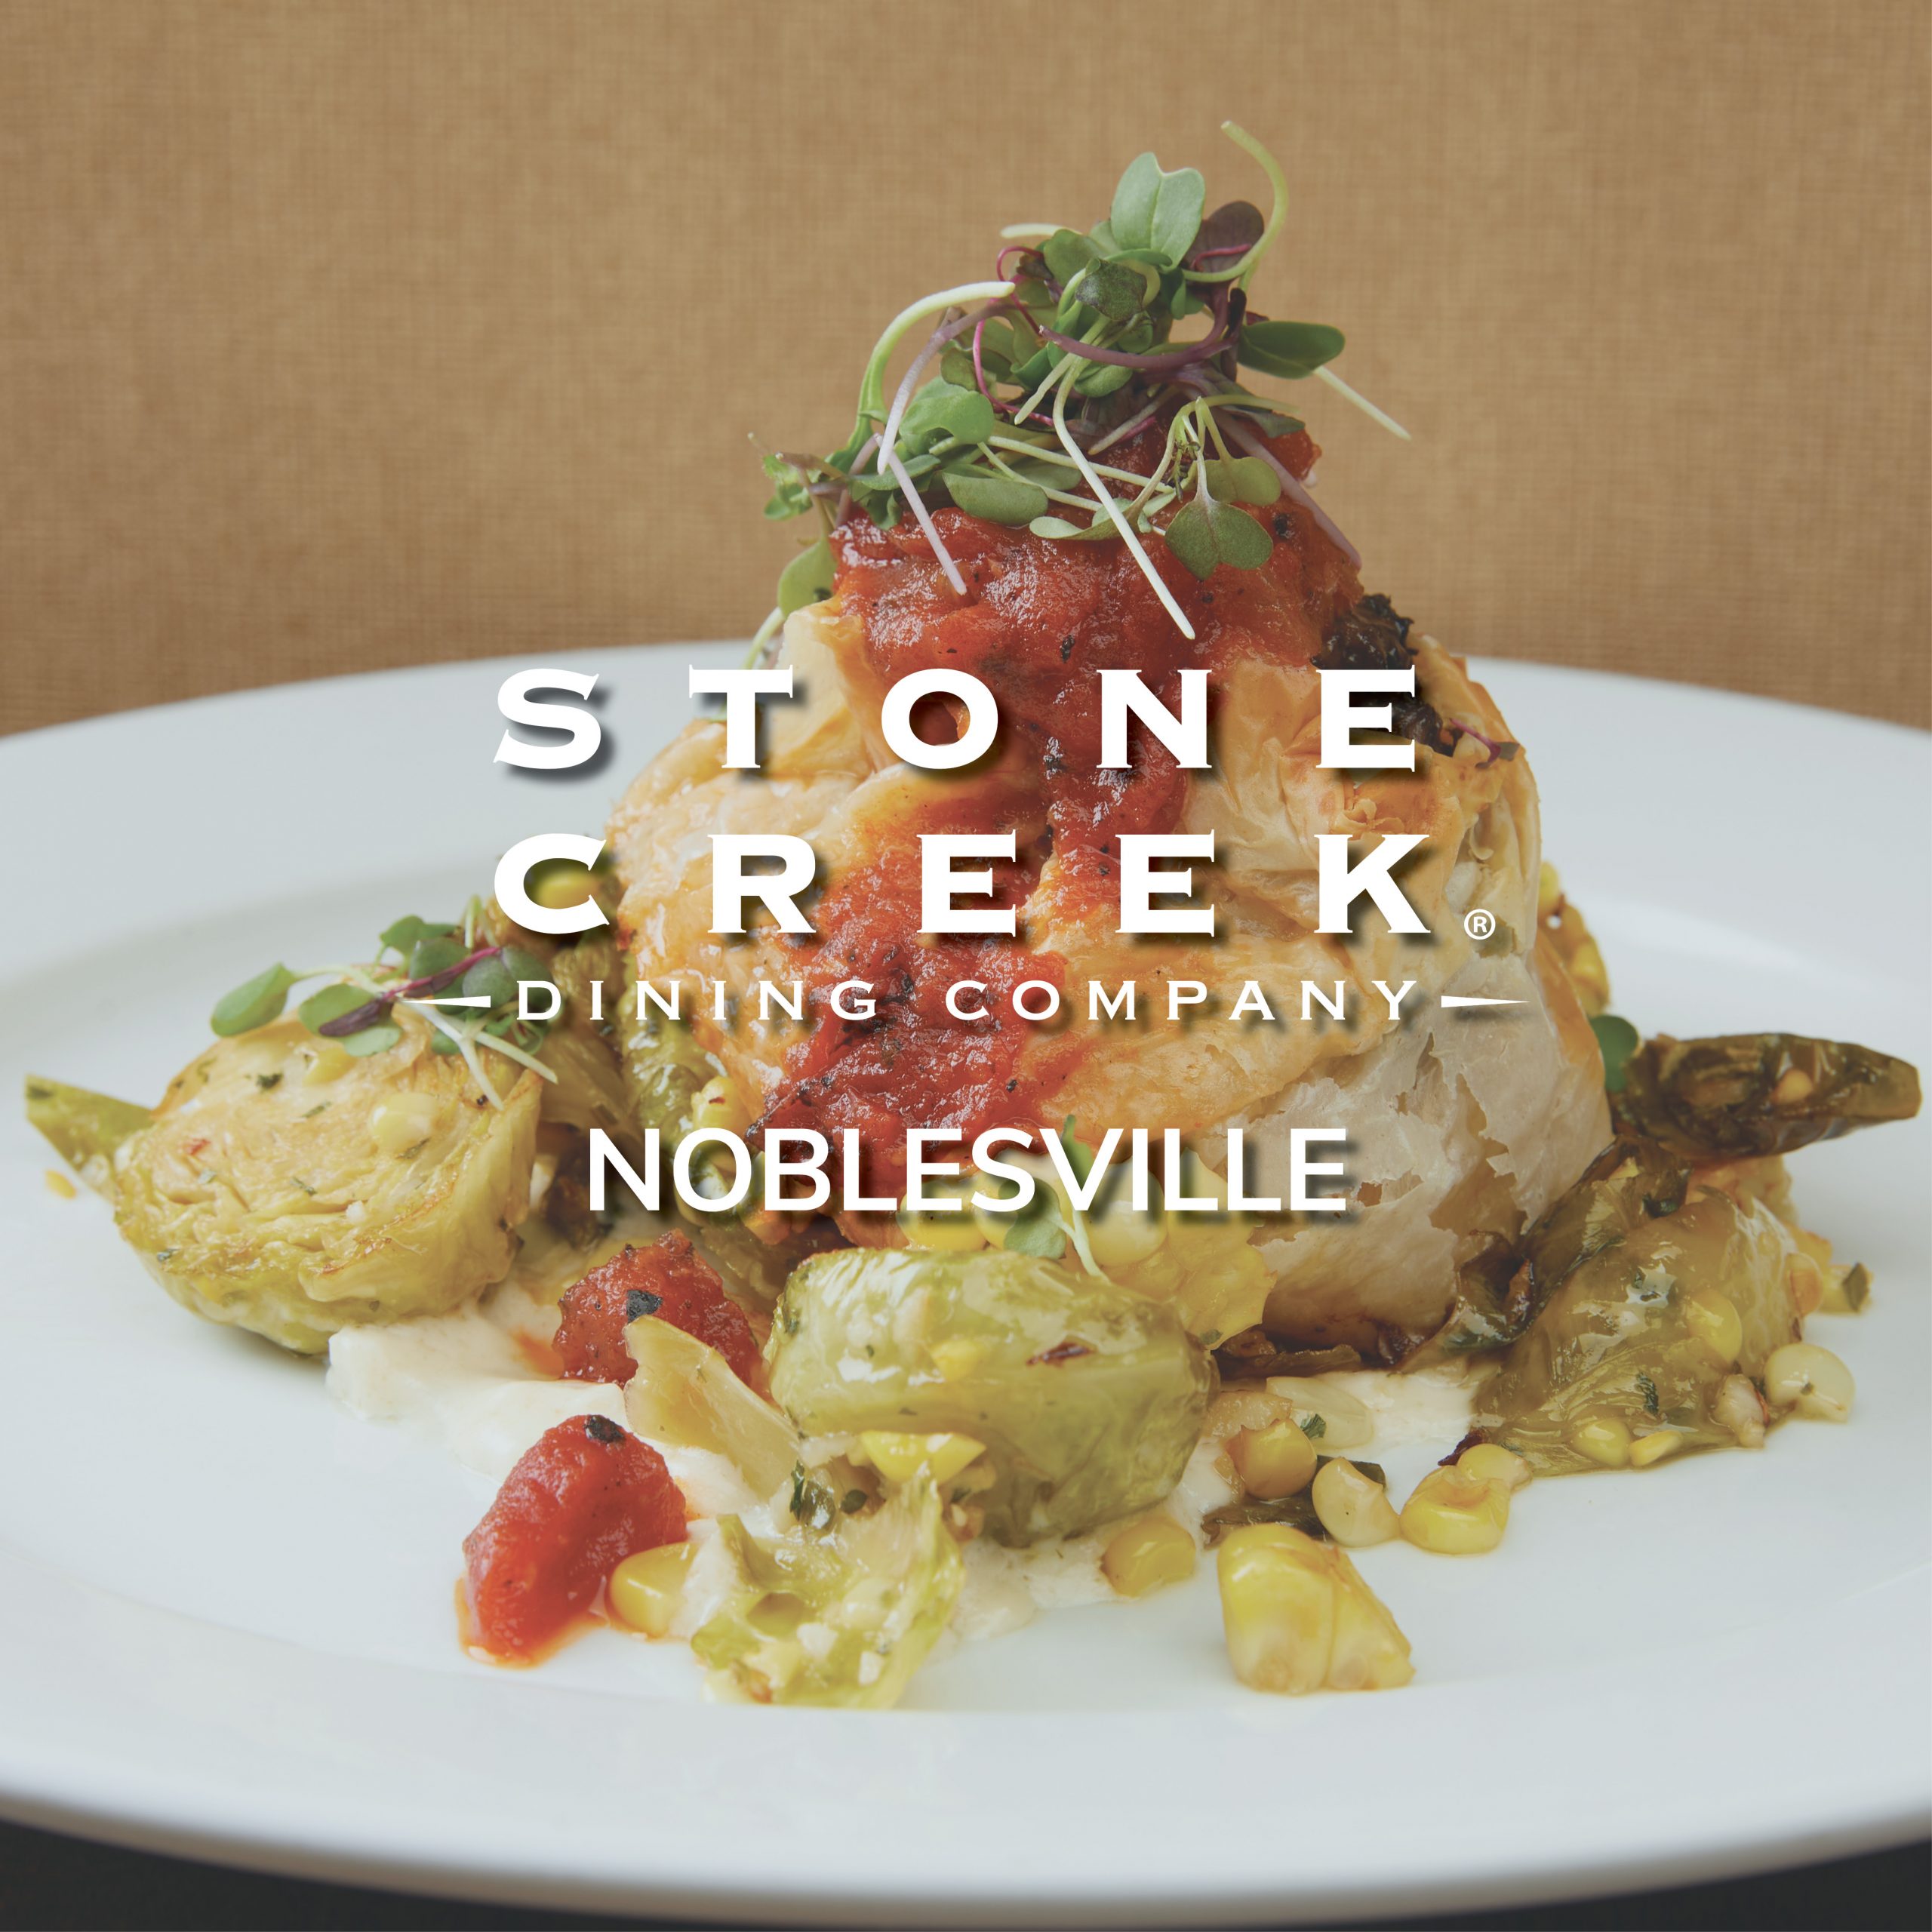 Stone Creek Dining Company – Noblesville